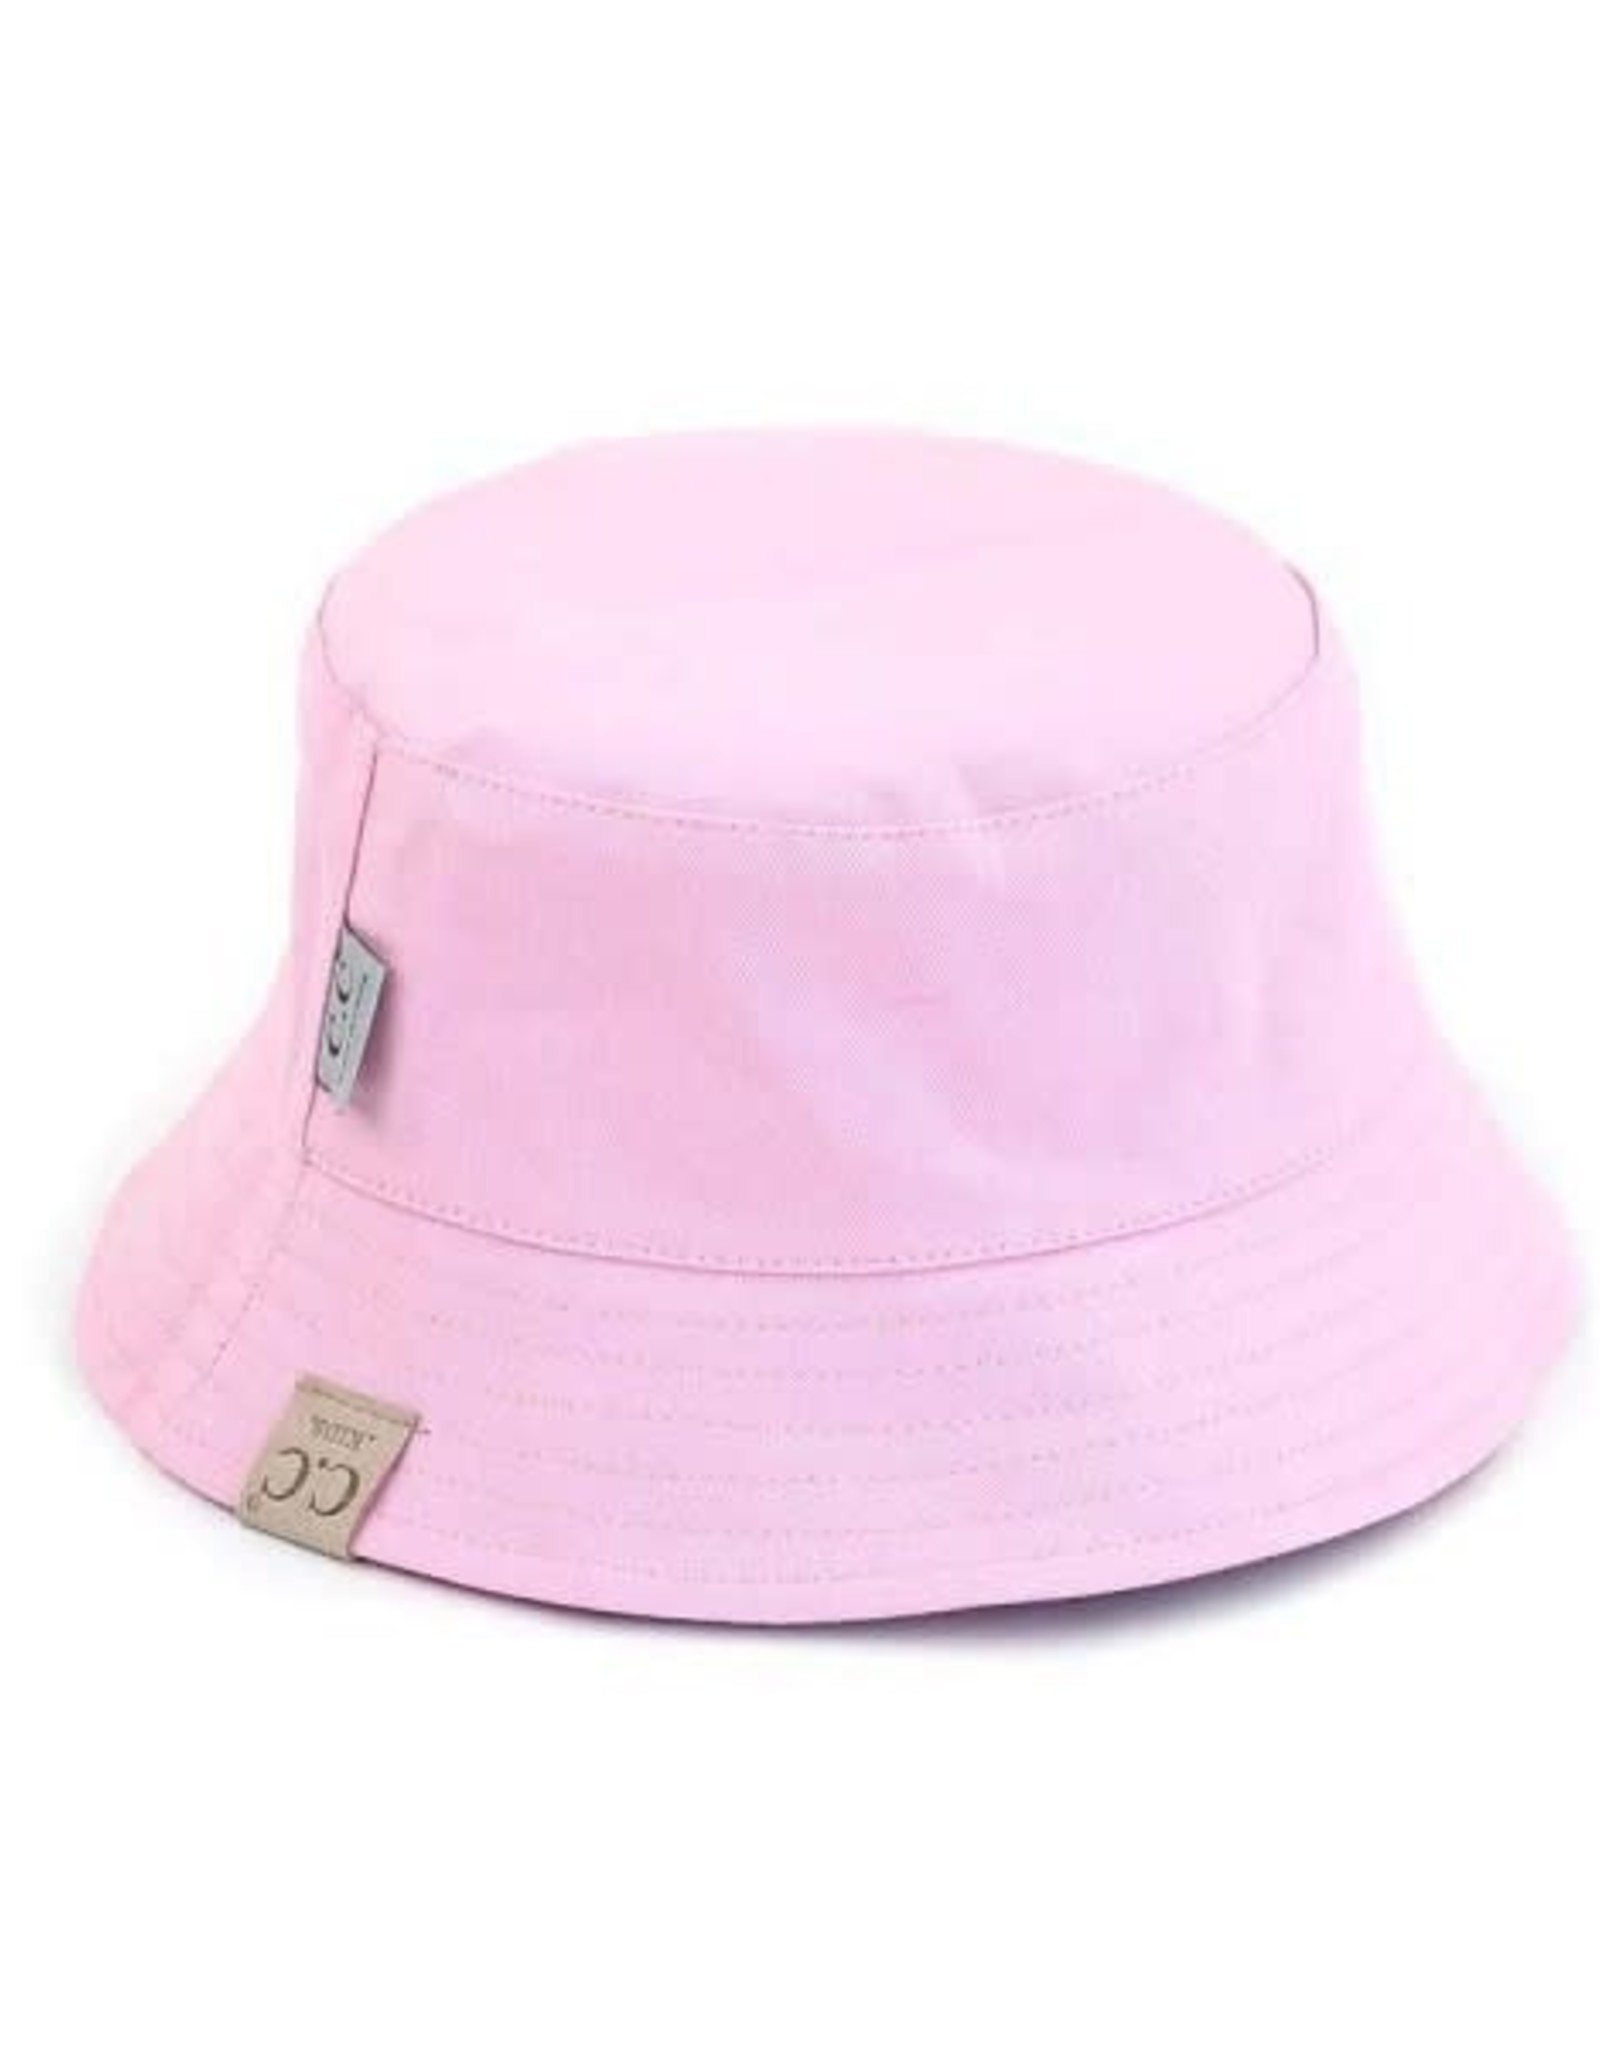 judson 725999 - C.C KIDS  Cotton Reversible Tie Dyed Bucket Hat - Pink